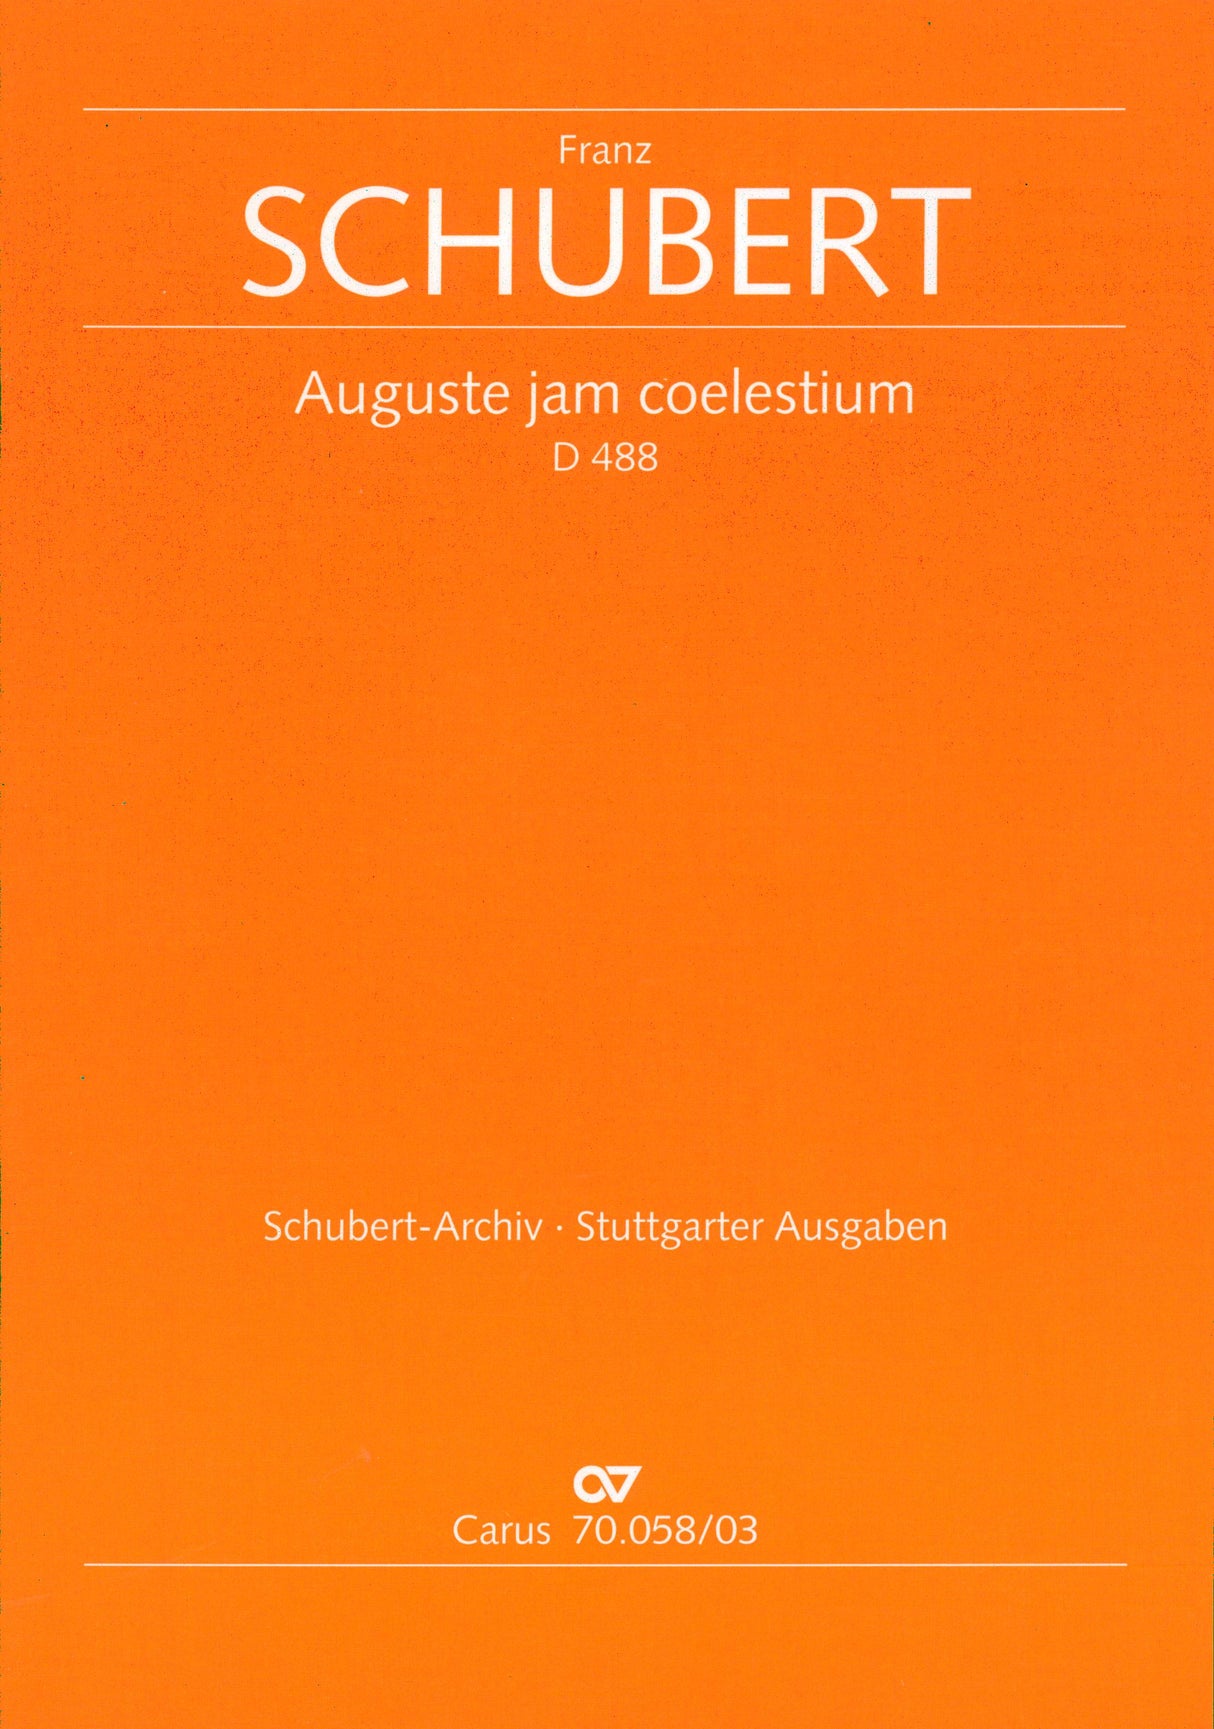 Schubert: Auguste jam coelestium, D. 488